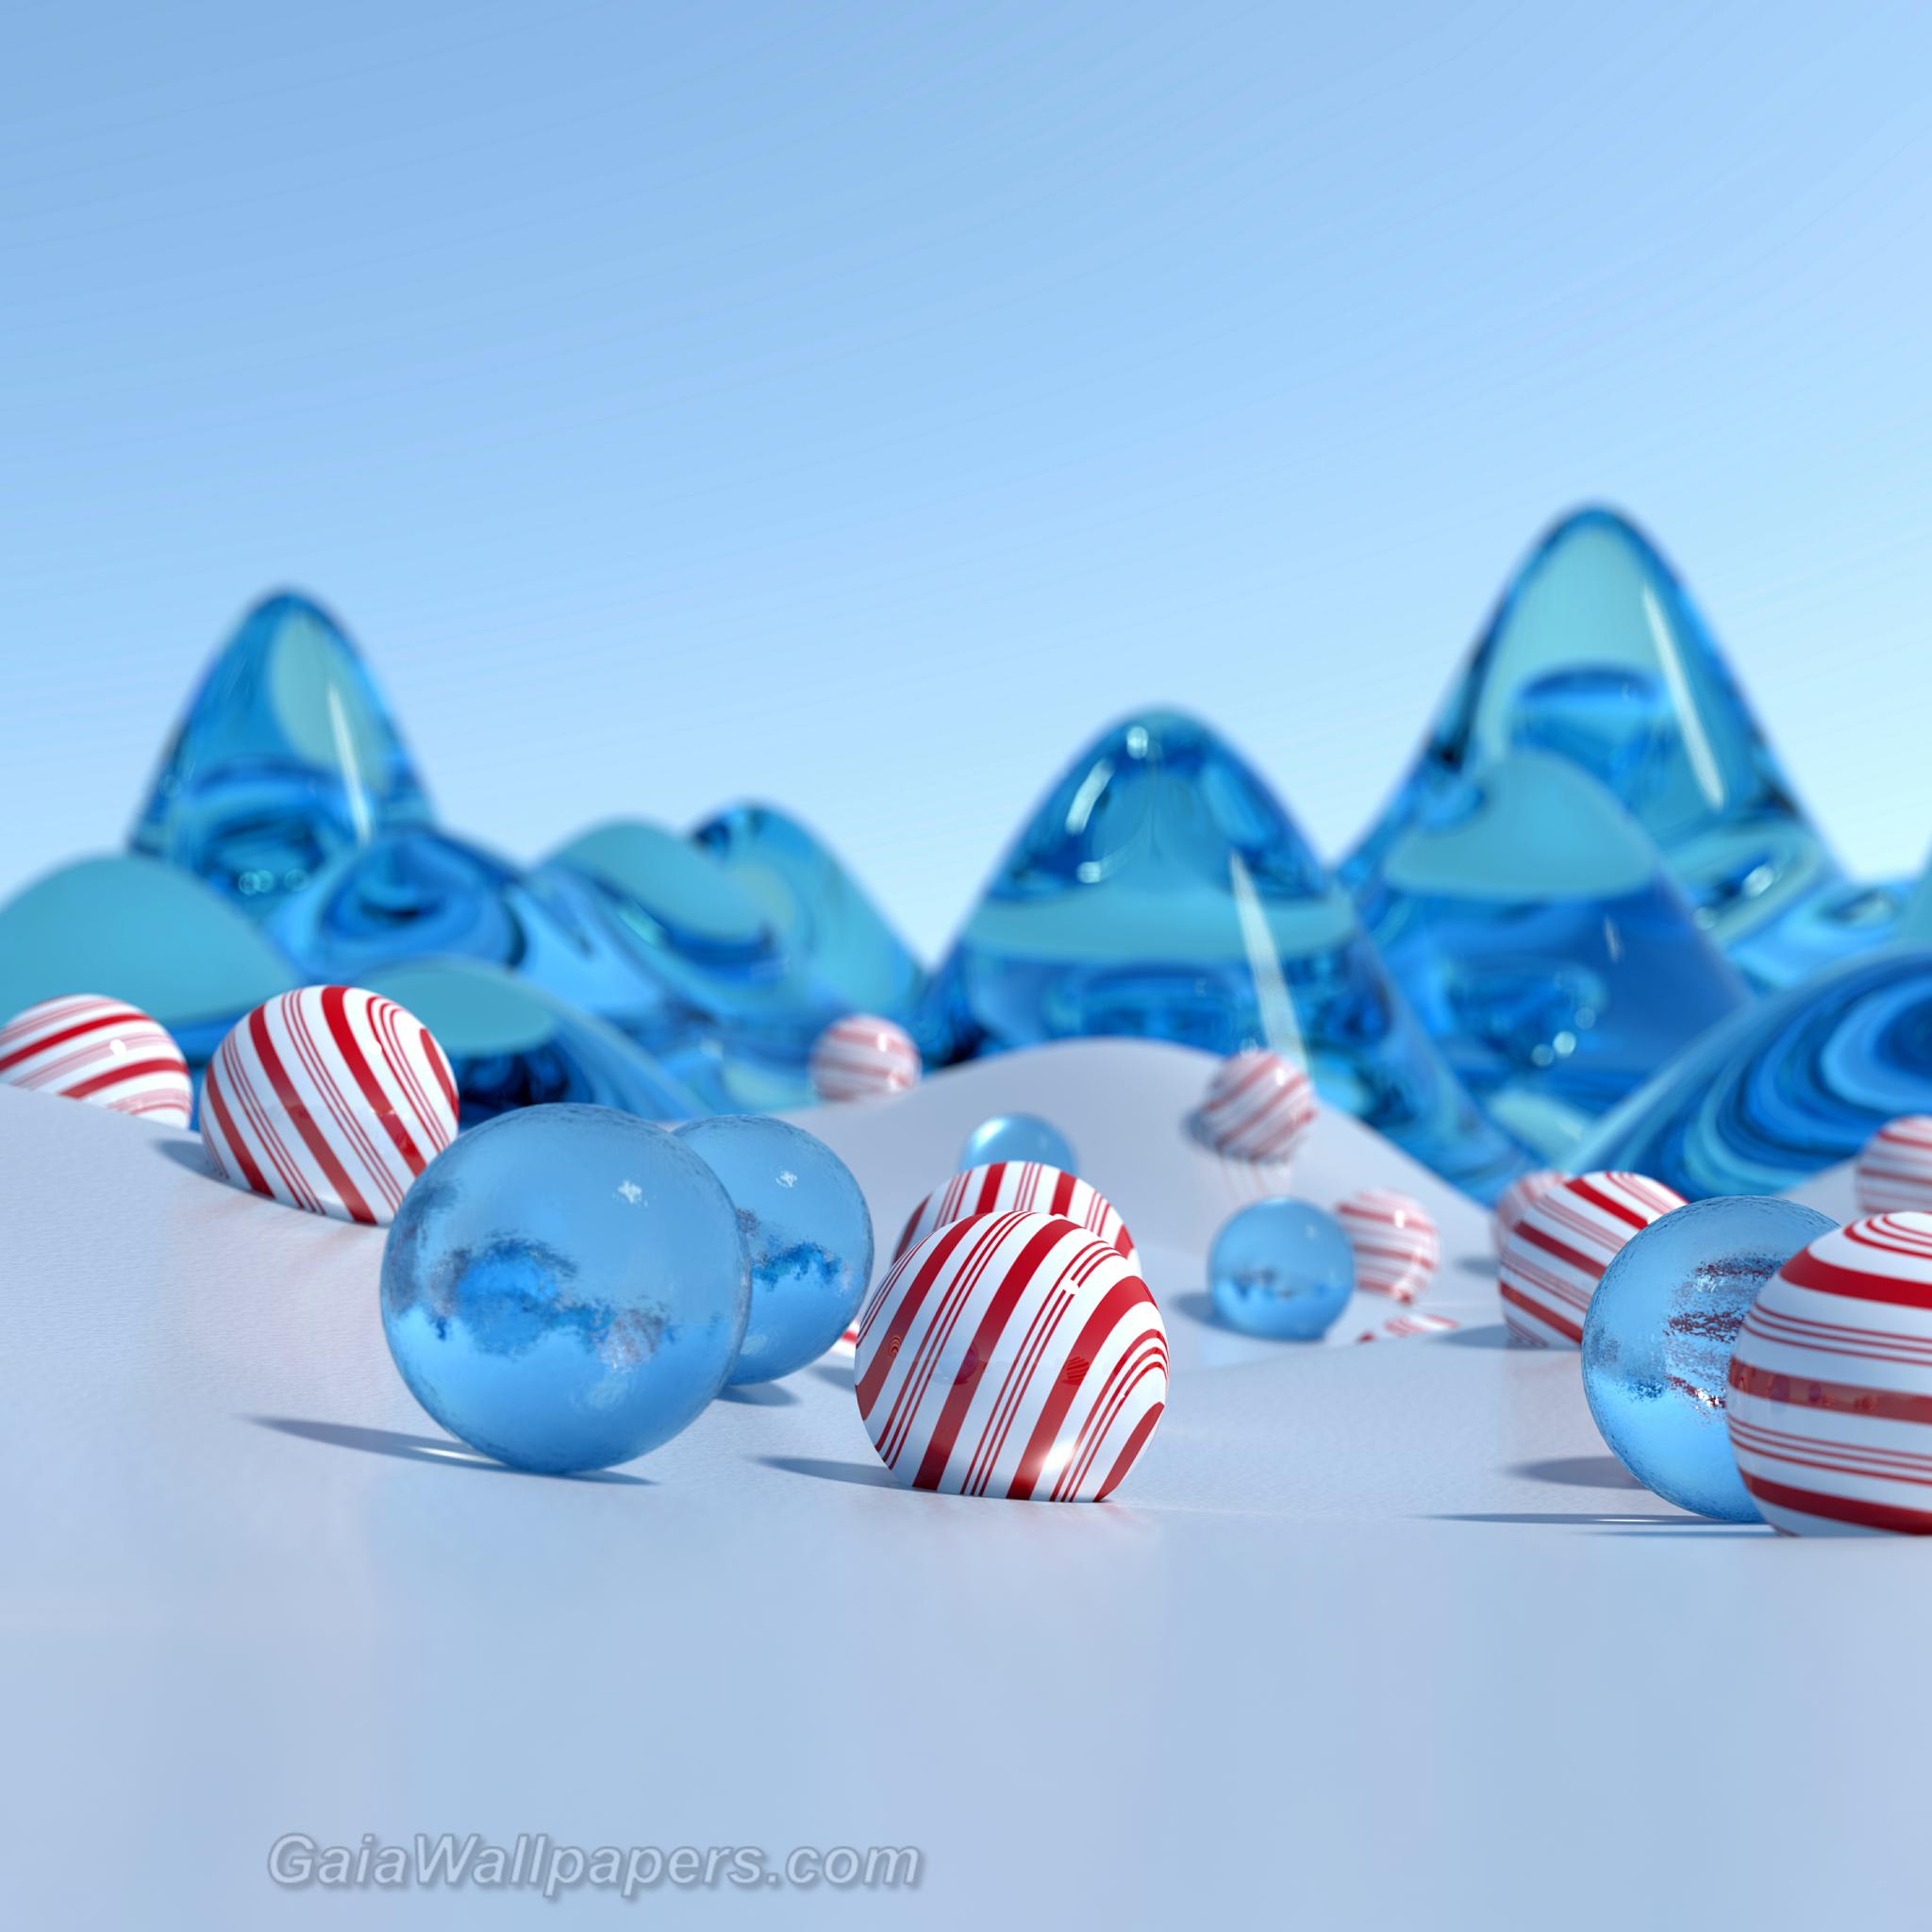 Perles de bonbons dans la terre glacée - Fonds d'écran gratuits